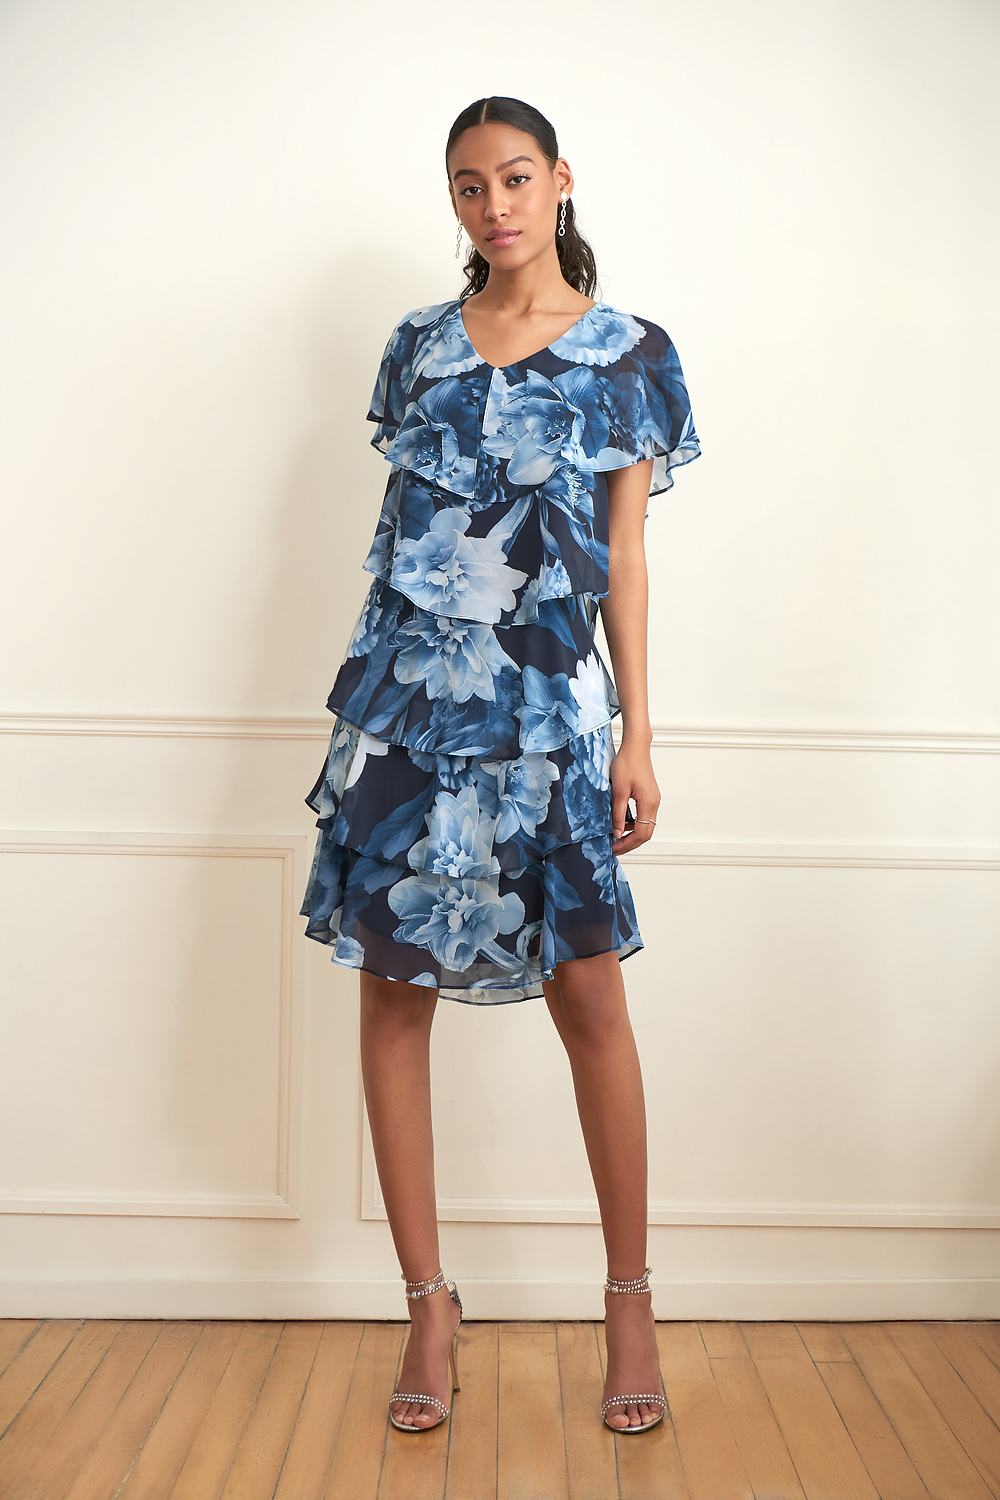 Joseph Ribkoff Tiered Floral Dress Style 221332. Midnight Blue/multi